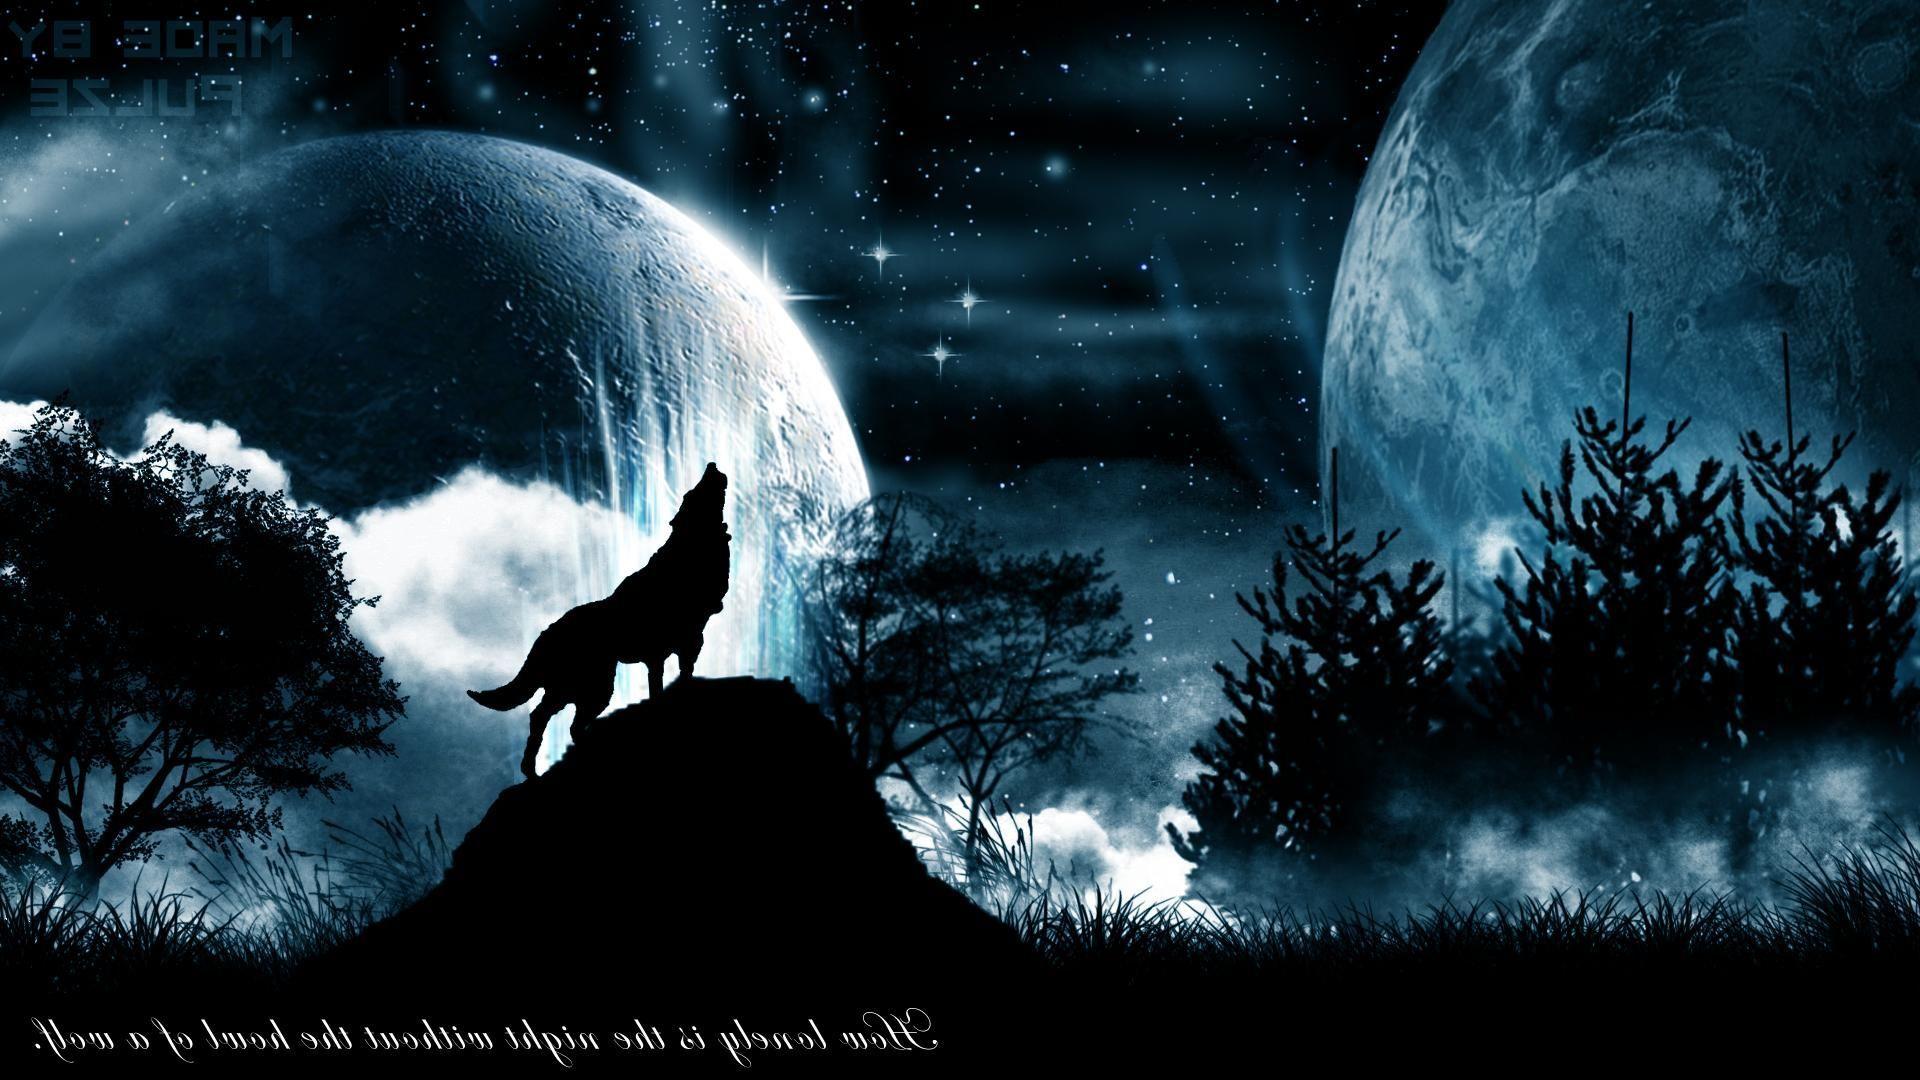 Dark Wolf Quotes Like. Book Art. Wolf, Wolf